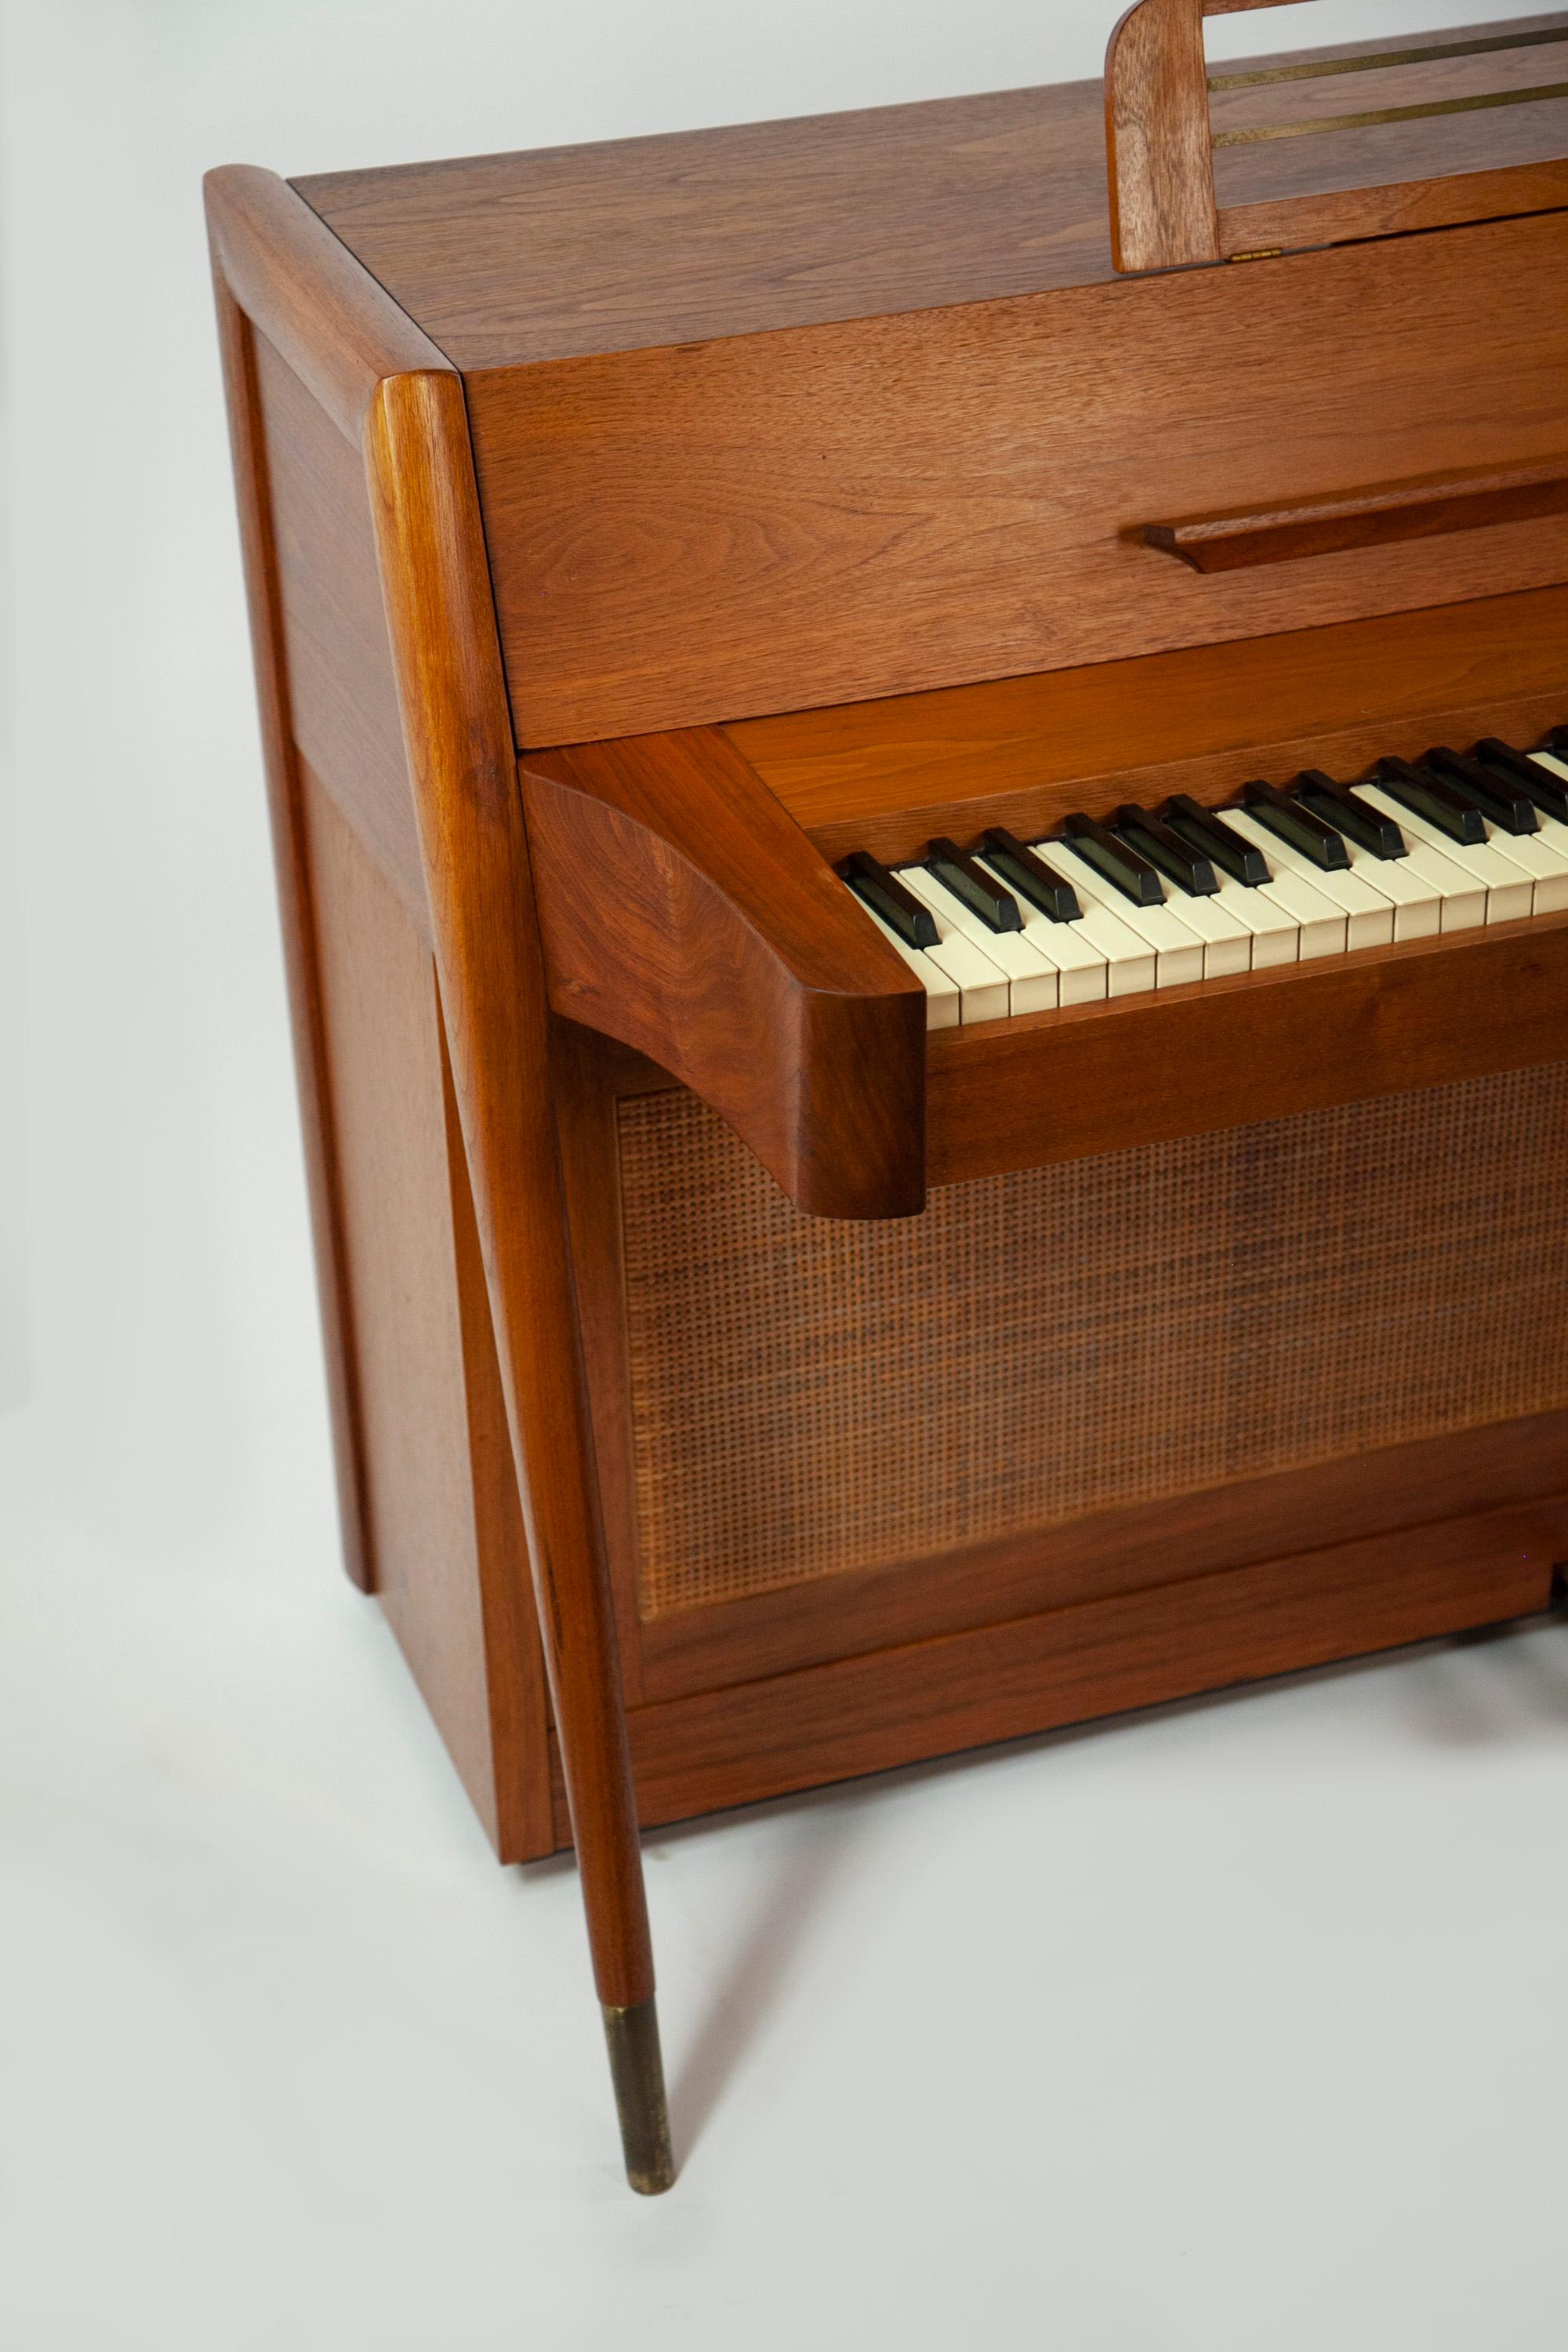 American Mid-Century Modern Baldwin Acrosonic Piano in Walnut and Caning, 1960's